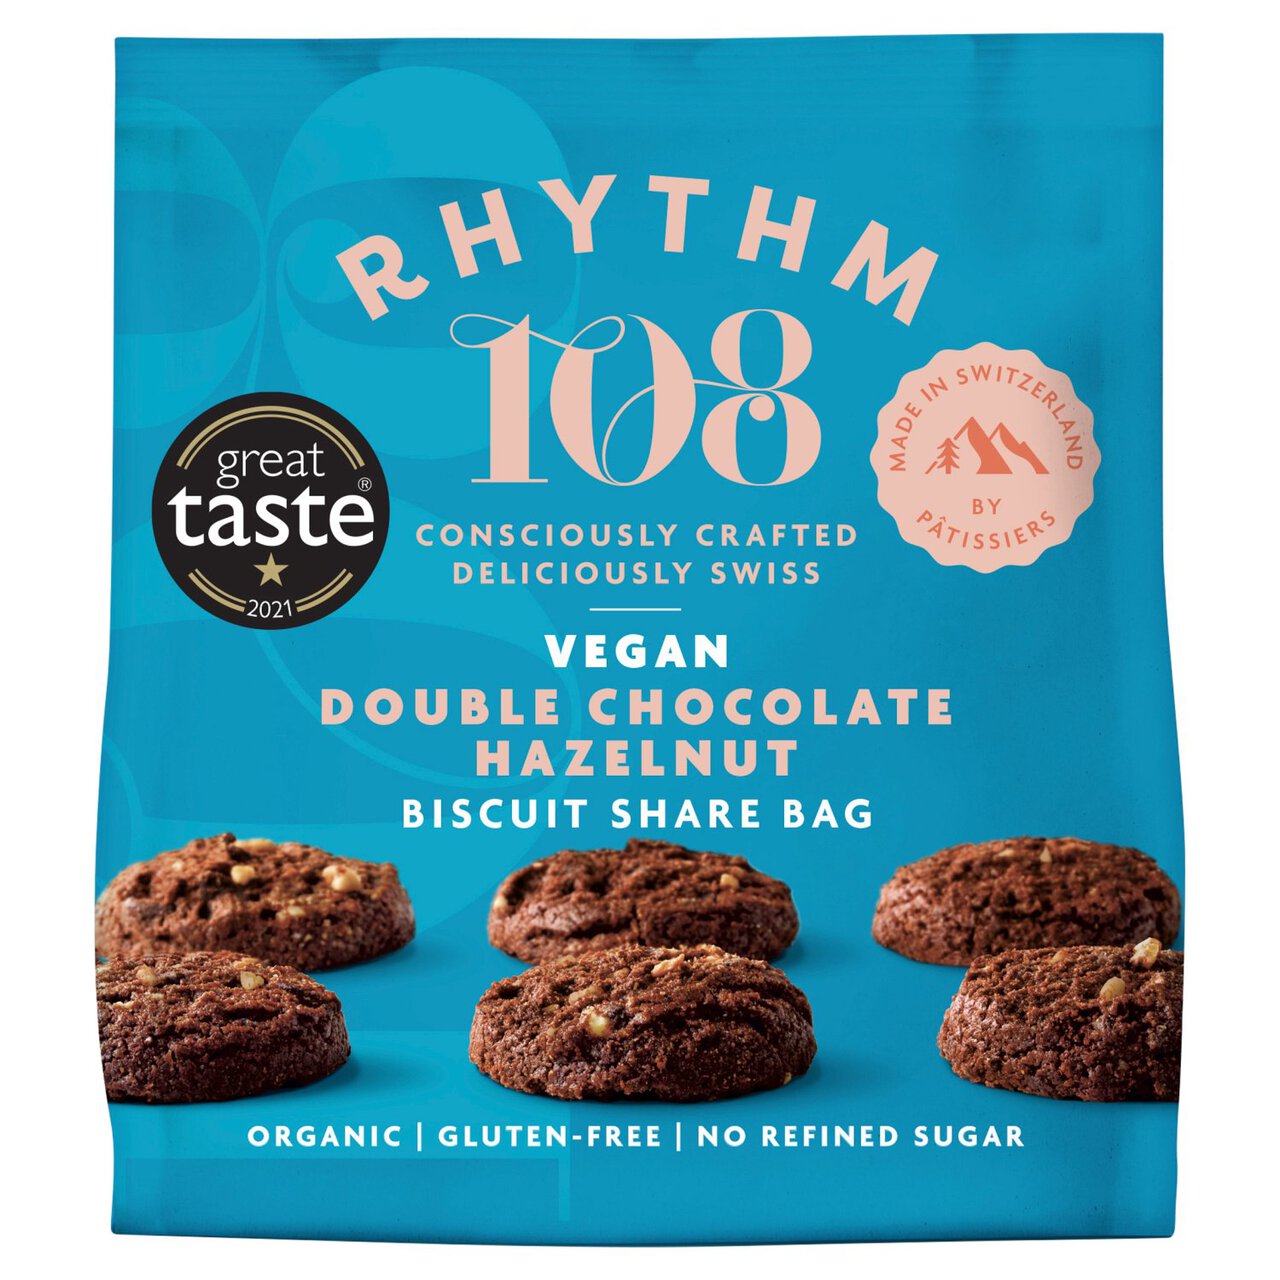 Rhythm 108 Swiss Vegan Double Chocolate Hazelnut Biscuit Share Bag 135g 135g